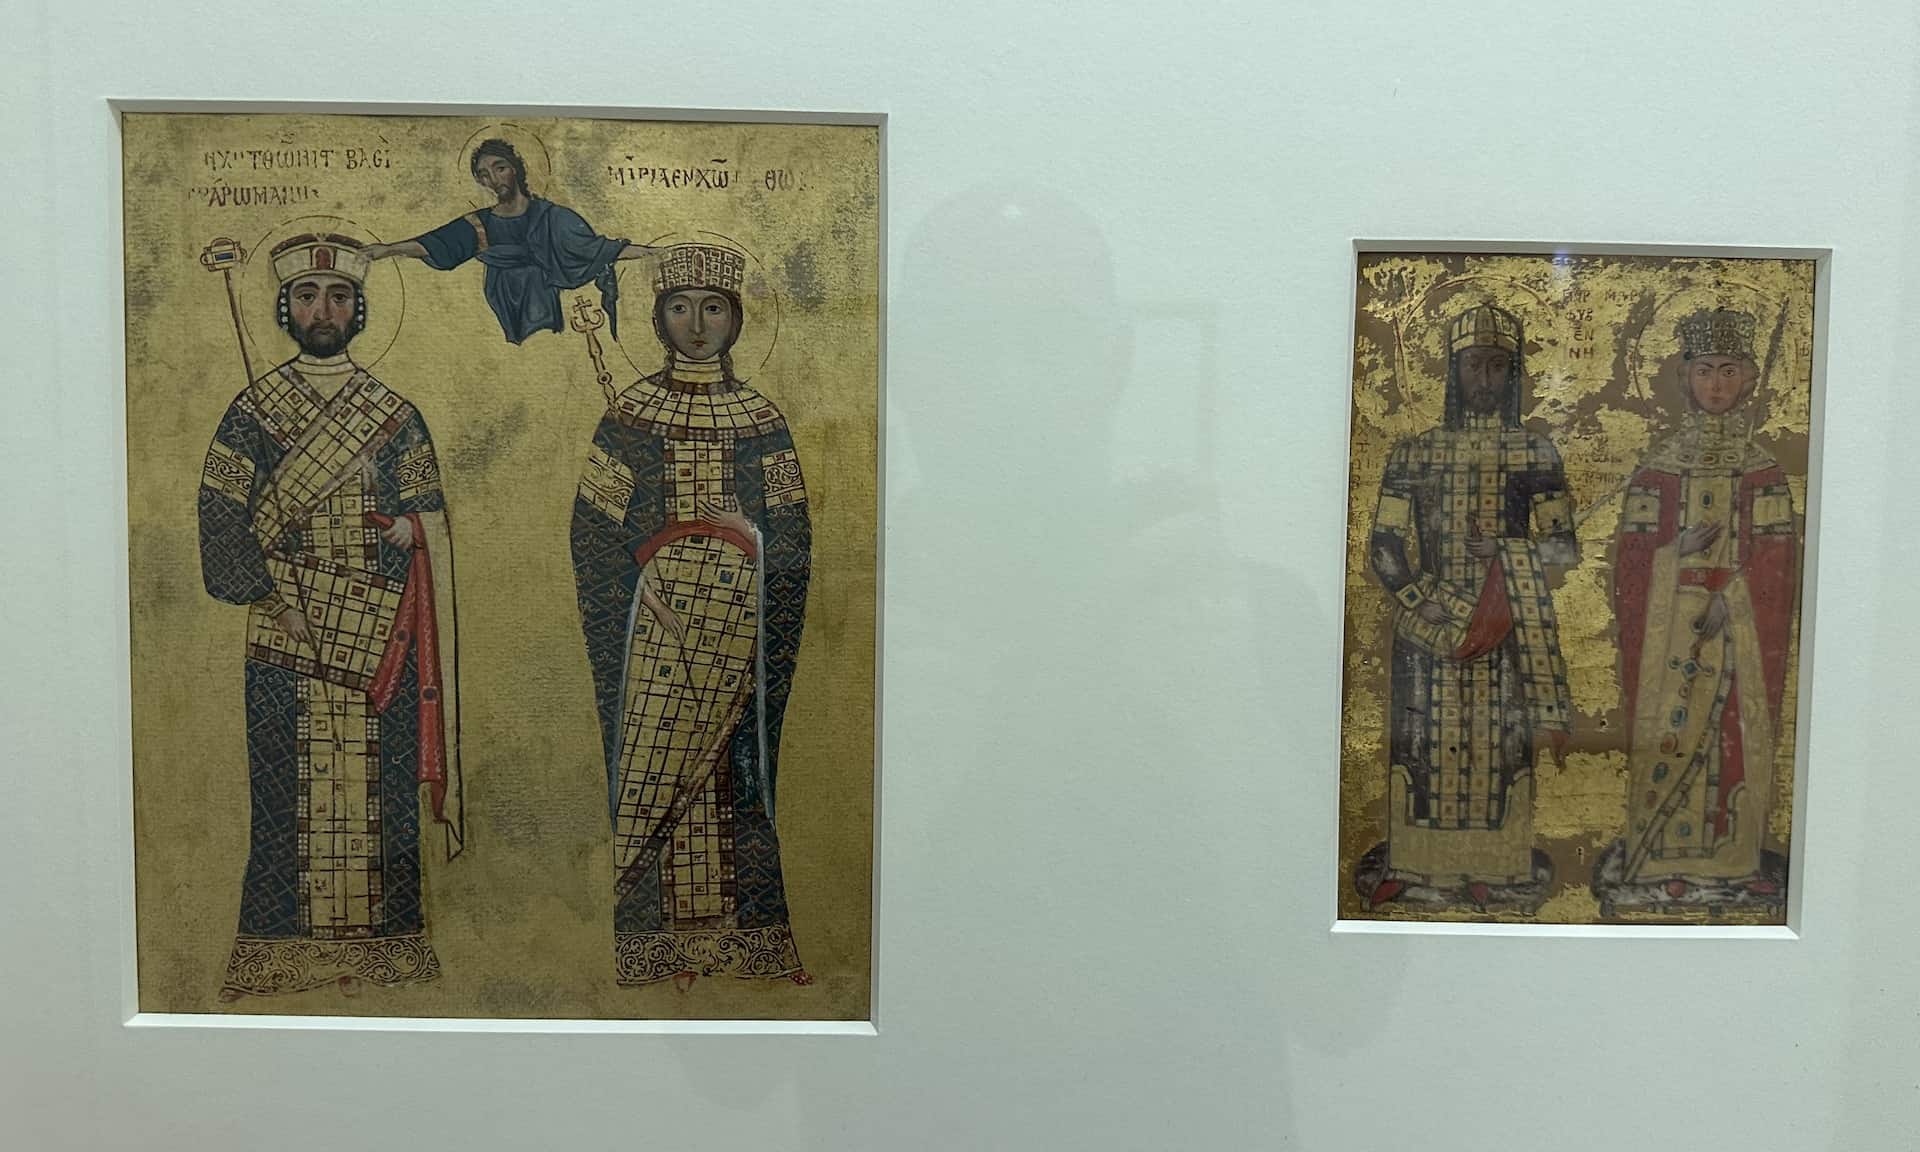 Image copies of Byzantine manuscripts, oil on parchment